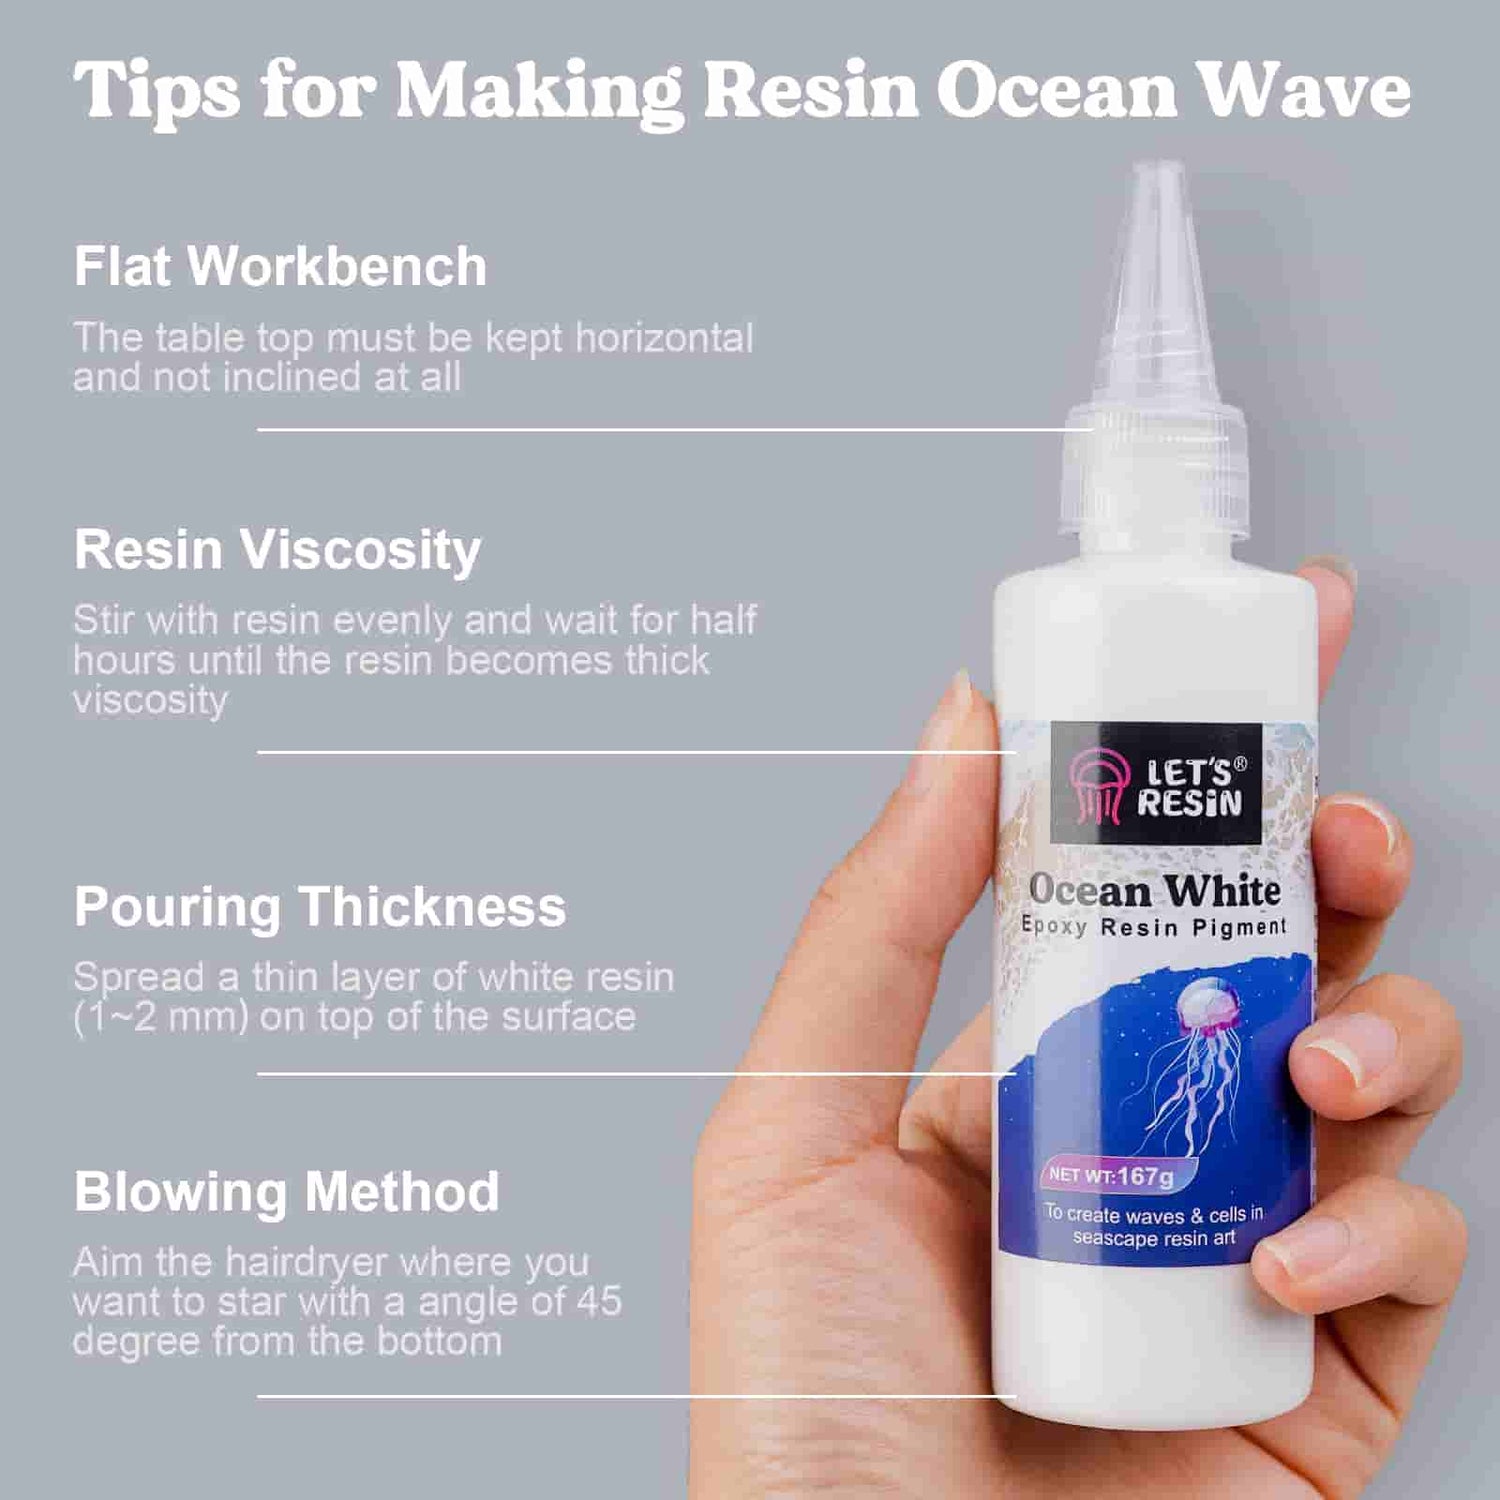 Foam White Ocean Resin Pigment Paste